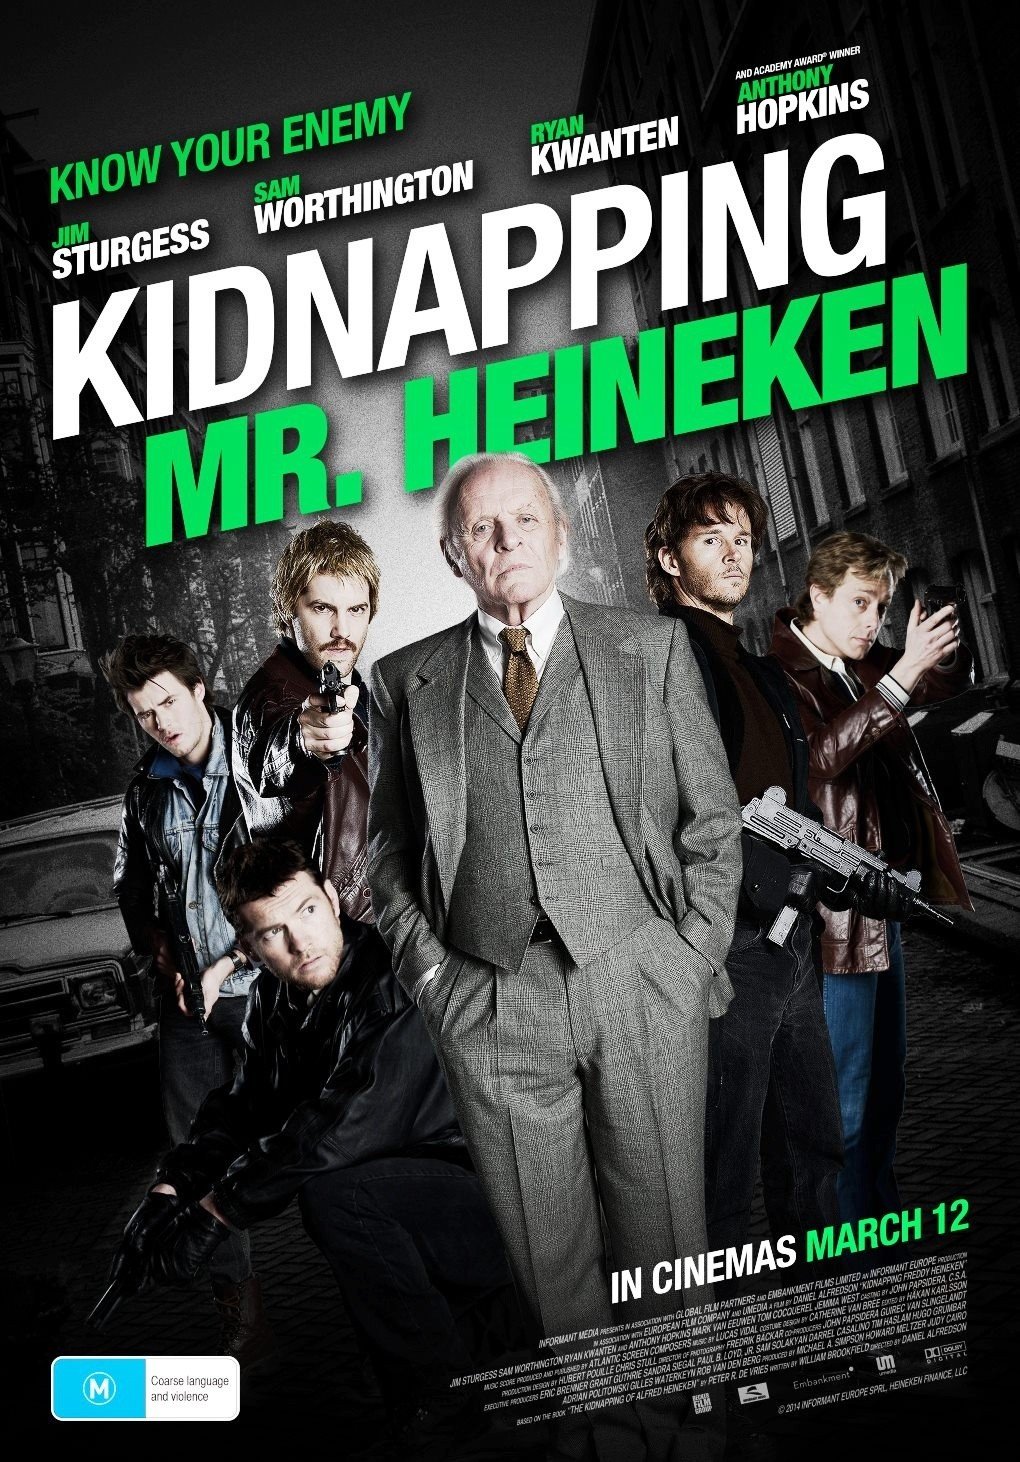 Poster of Alchemy's Kidnapping Mr. Heineken (2015)